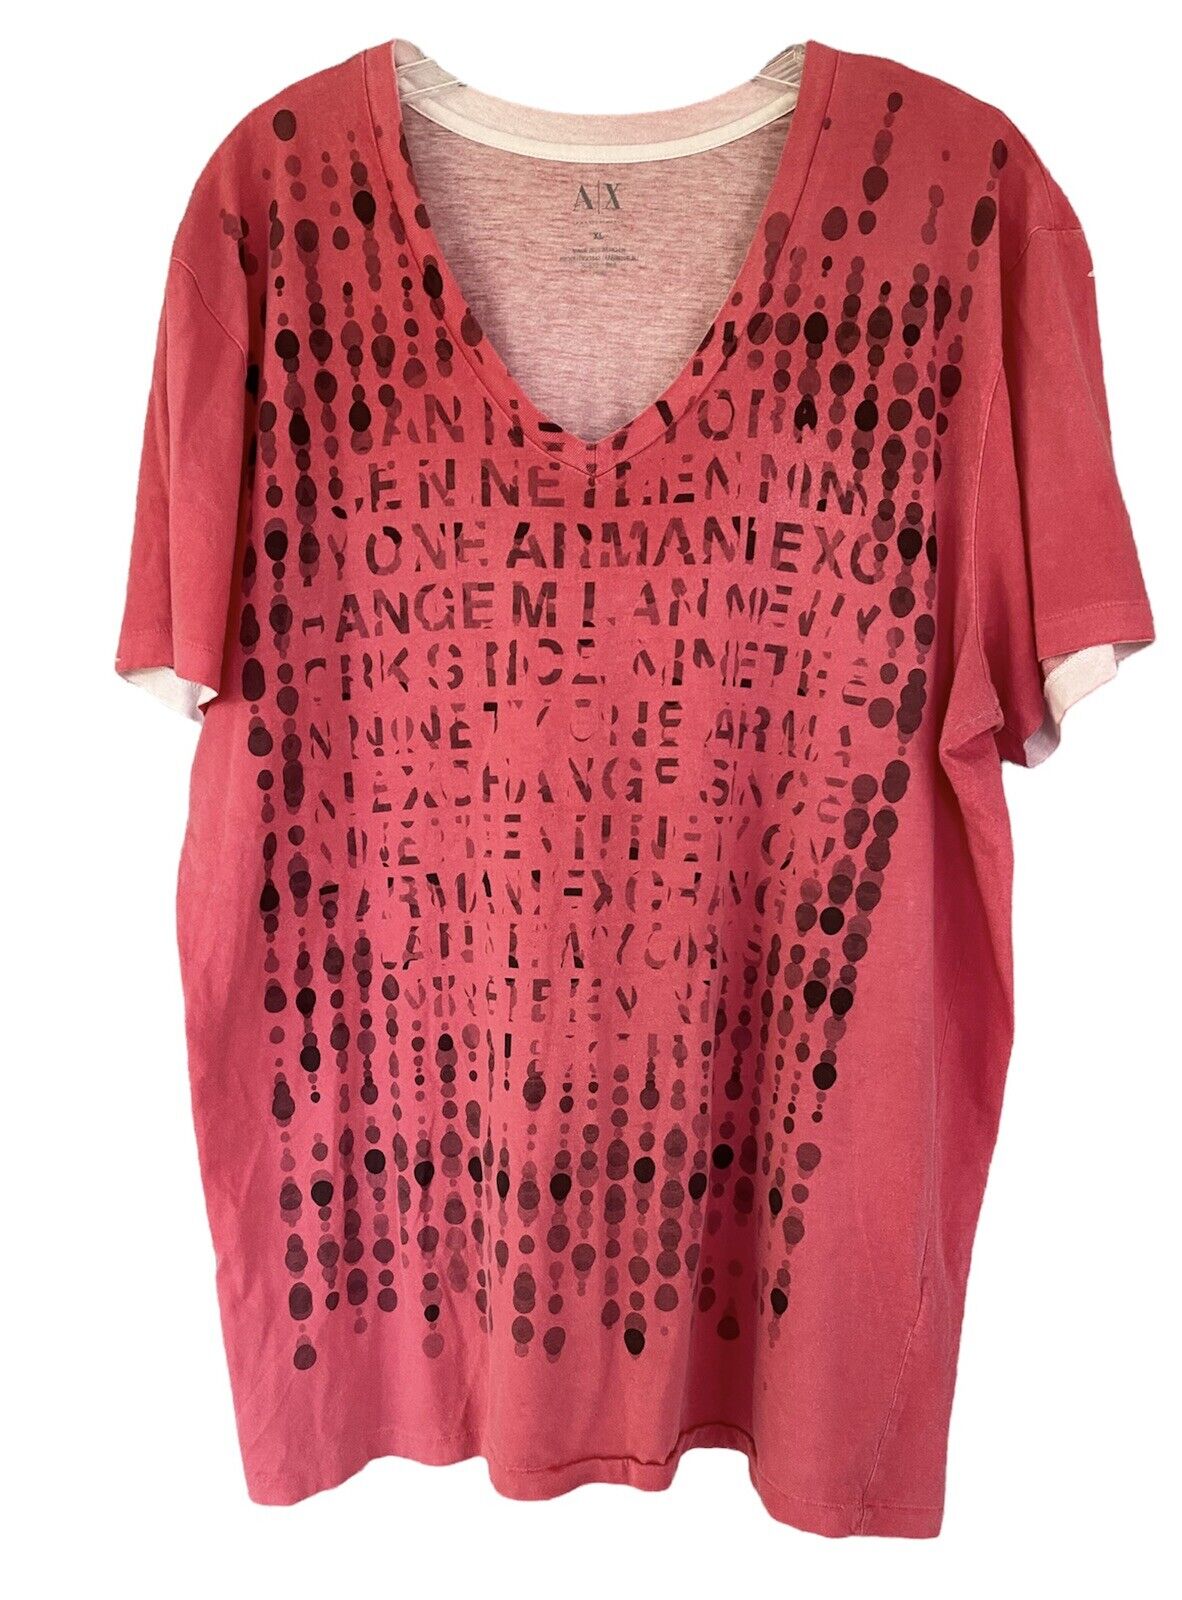 Armani Exchange womans v neck t shirt XL - image 1